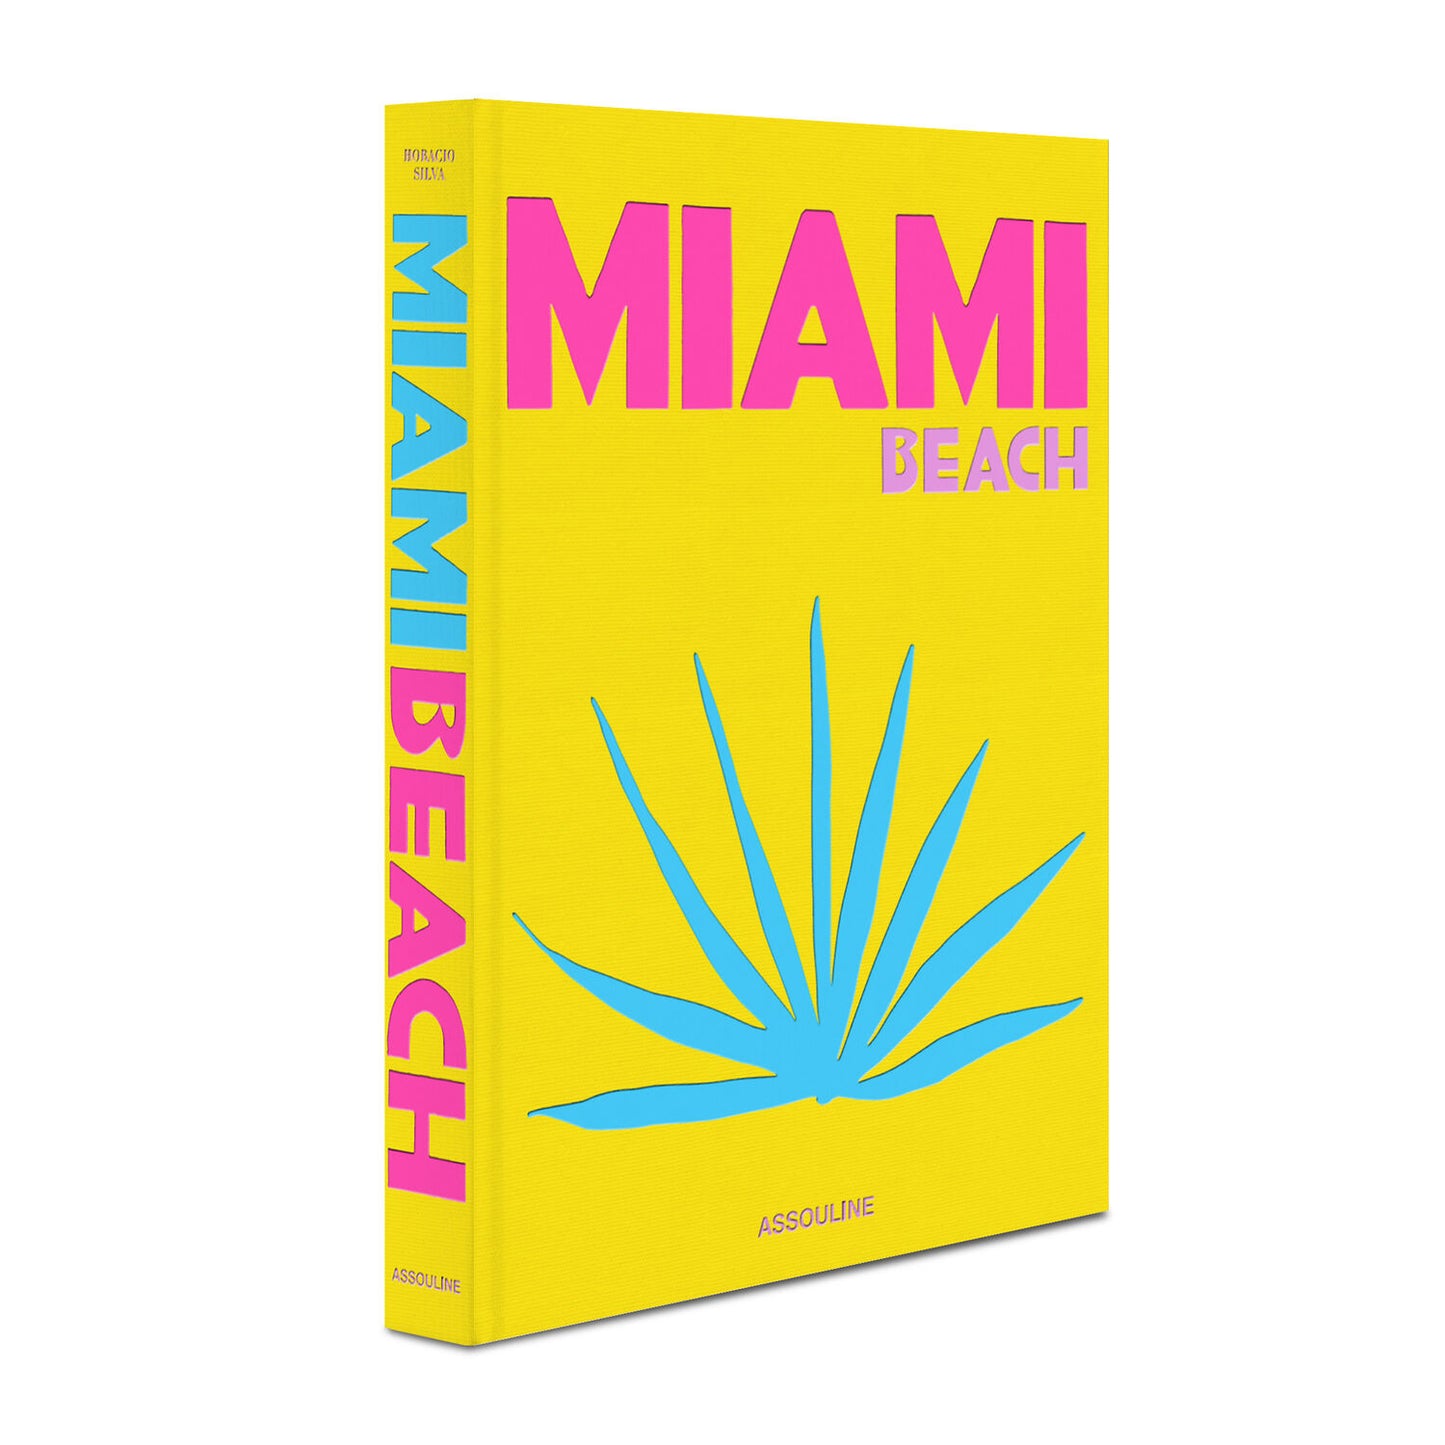 MIAMI BEACH by Assouline